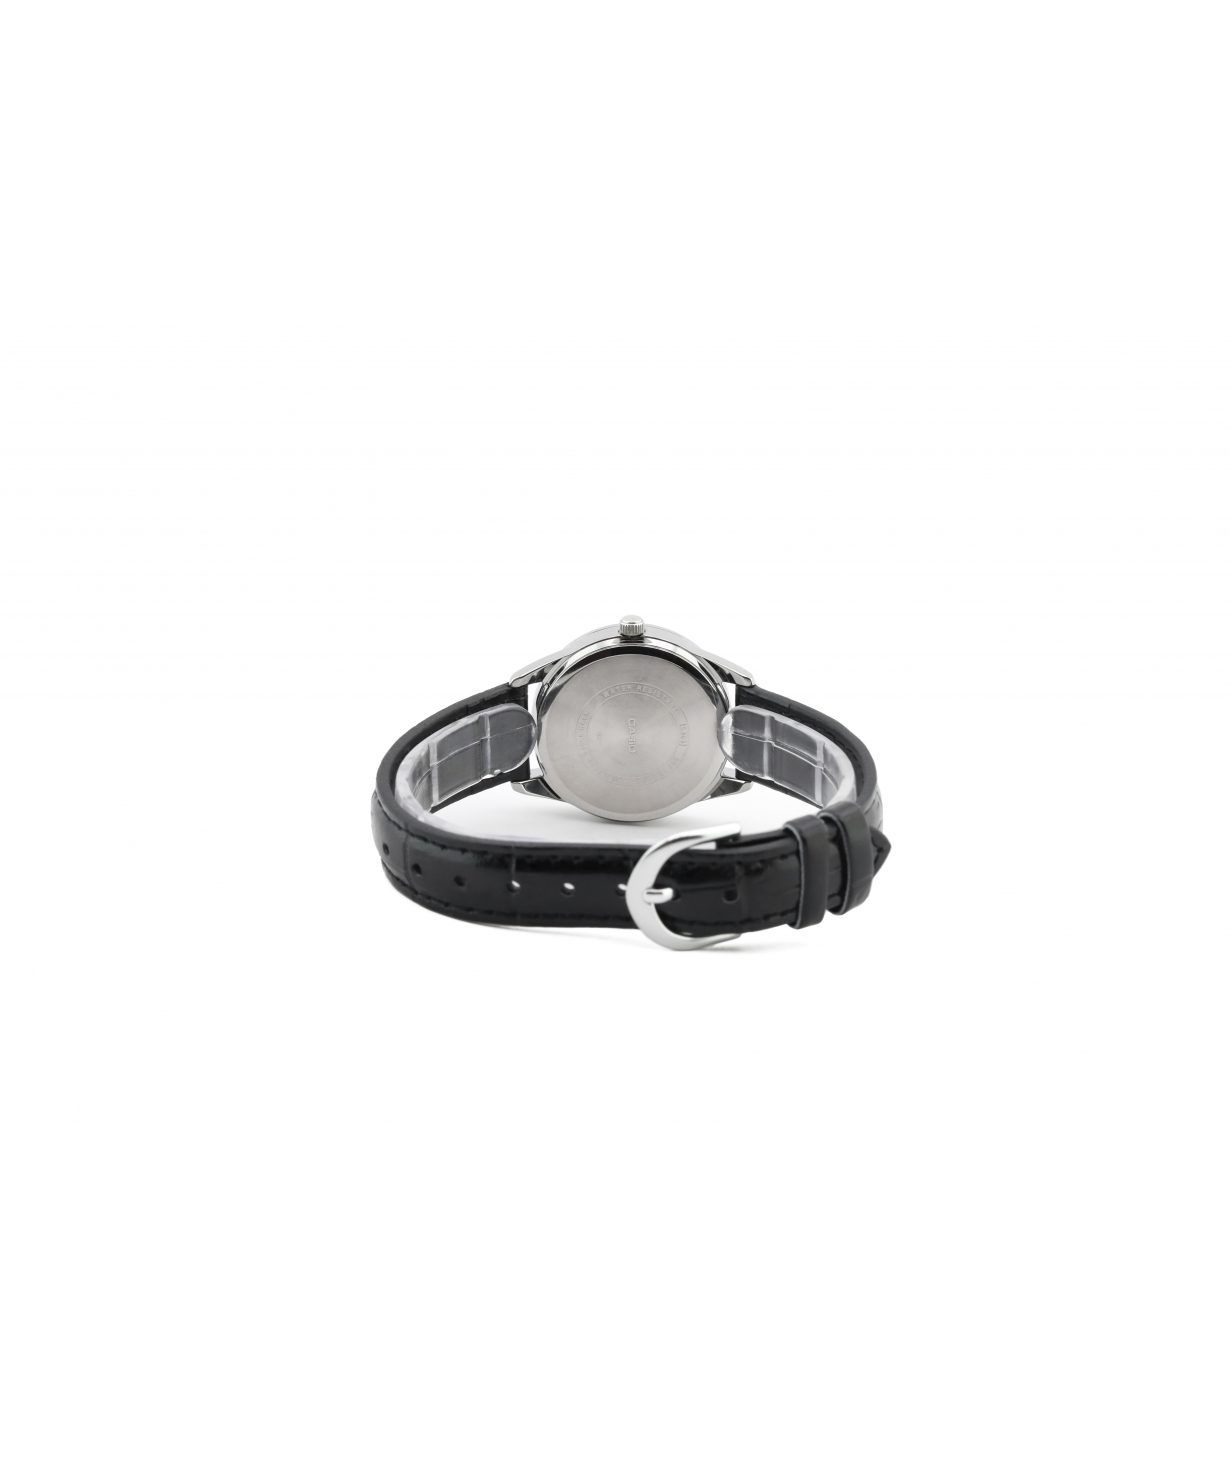 Wristwatch `Casio` LTP-V005L-7B2UDF